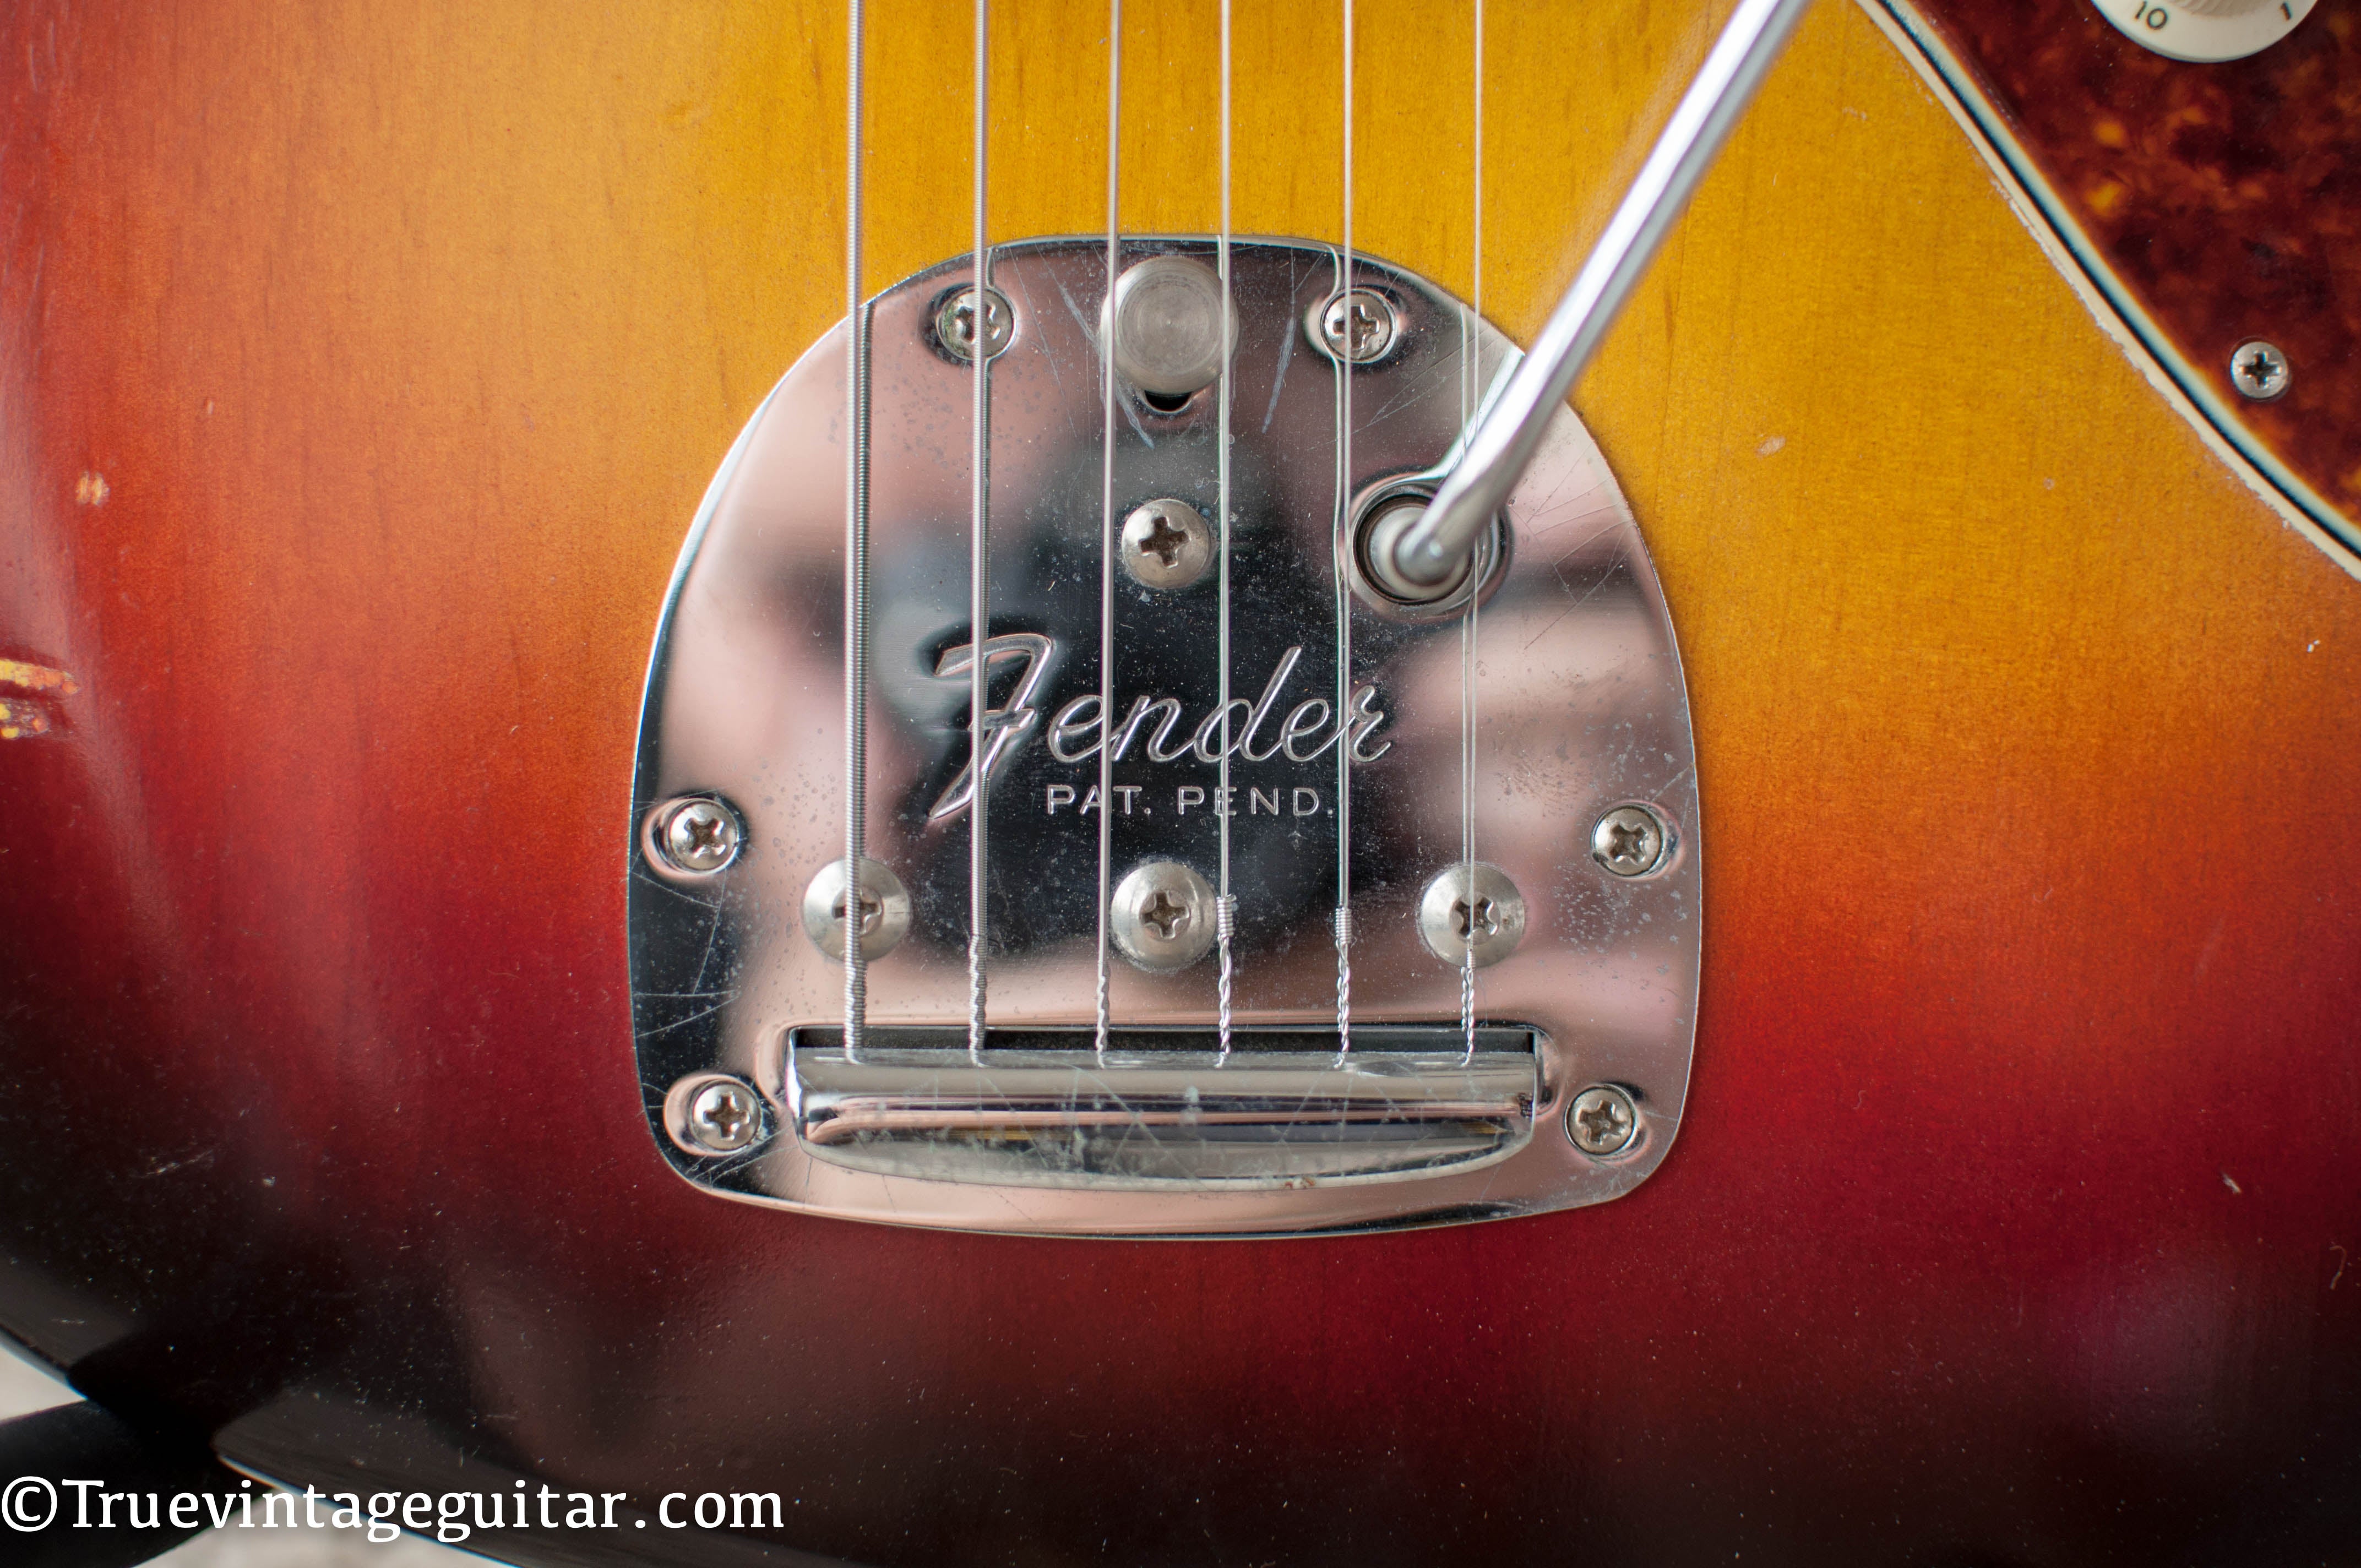 "Pat Pending" tremolo tailpiece, vintage Fender Jazzmaster electric guitar